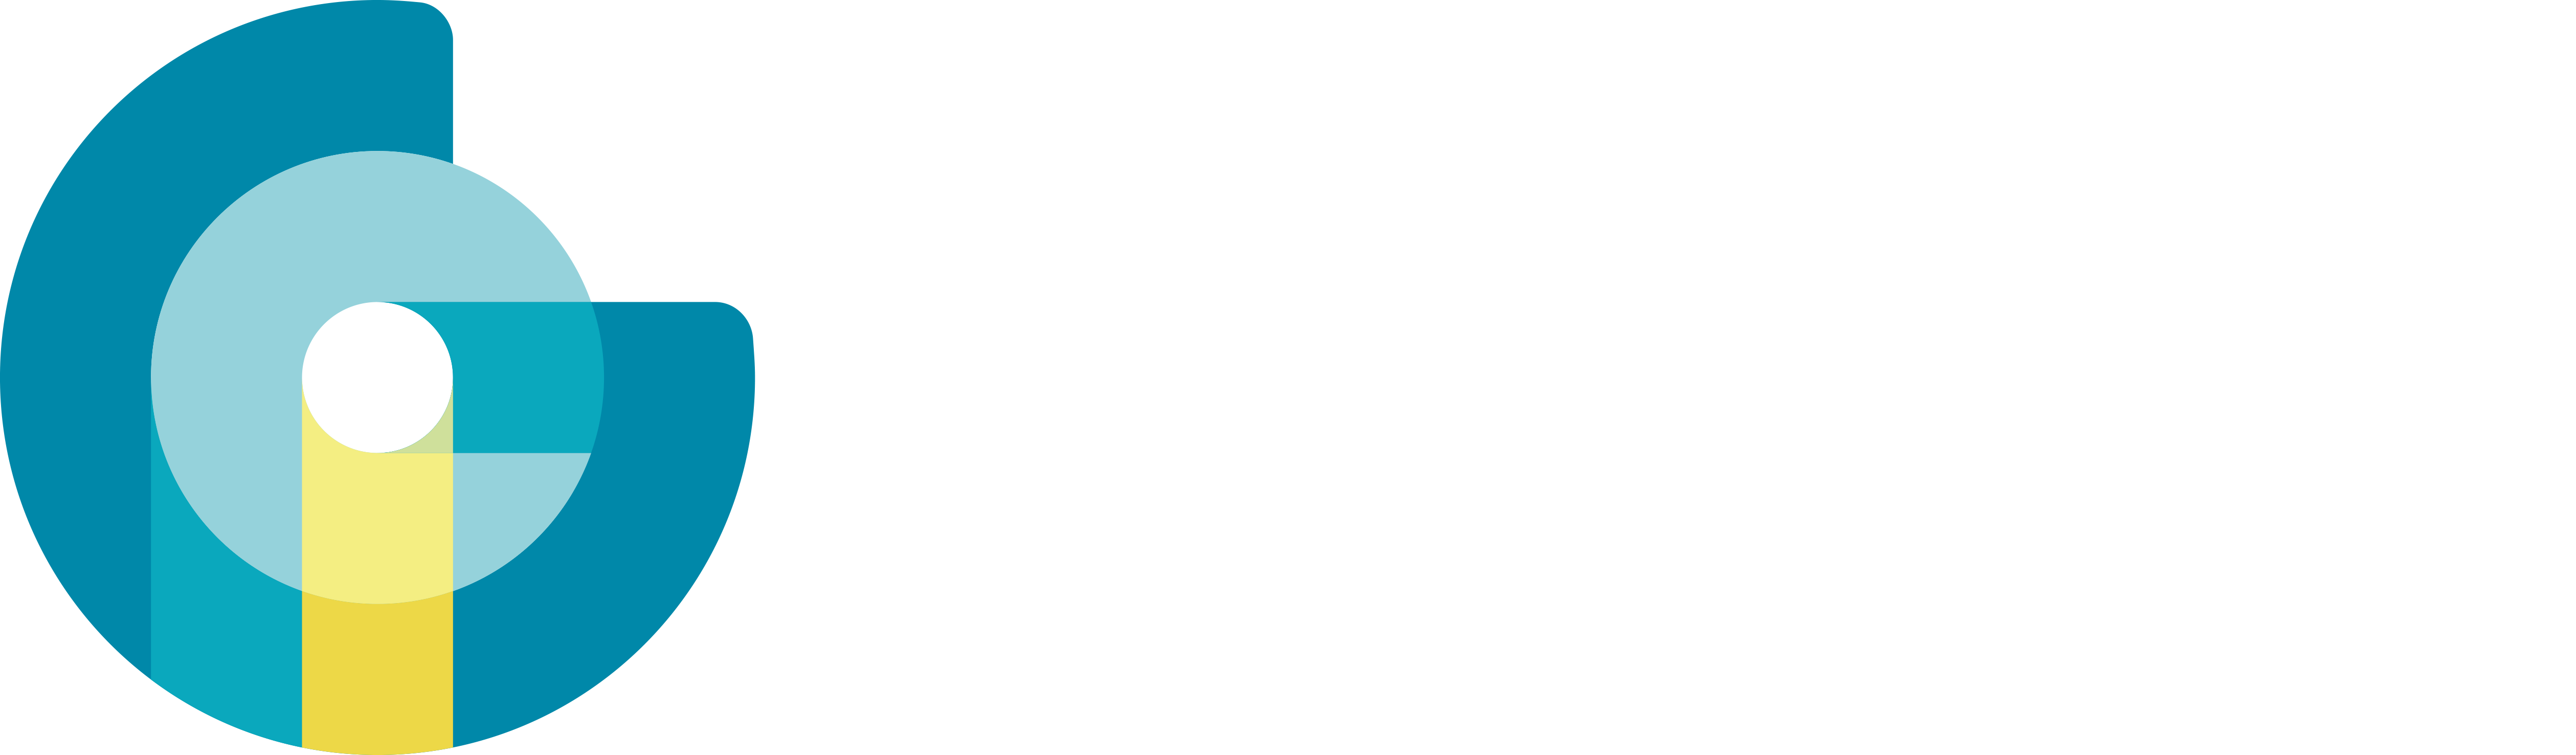 GPI Consulting GmbH - Unternehmensberatung Referenz